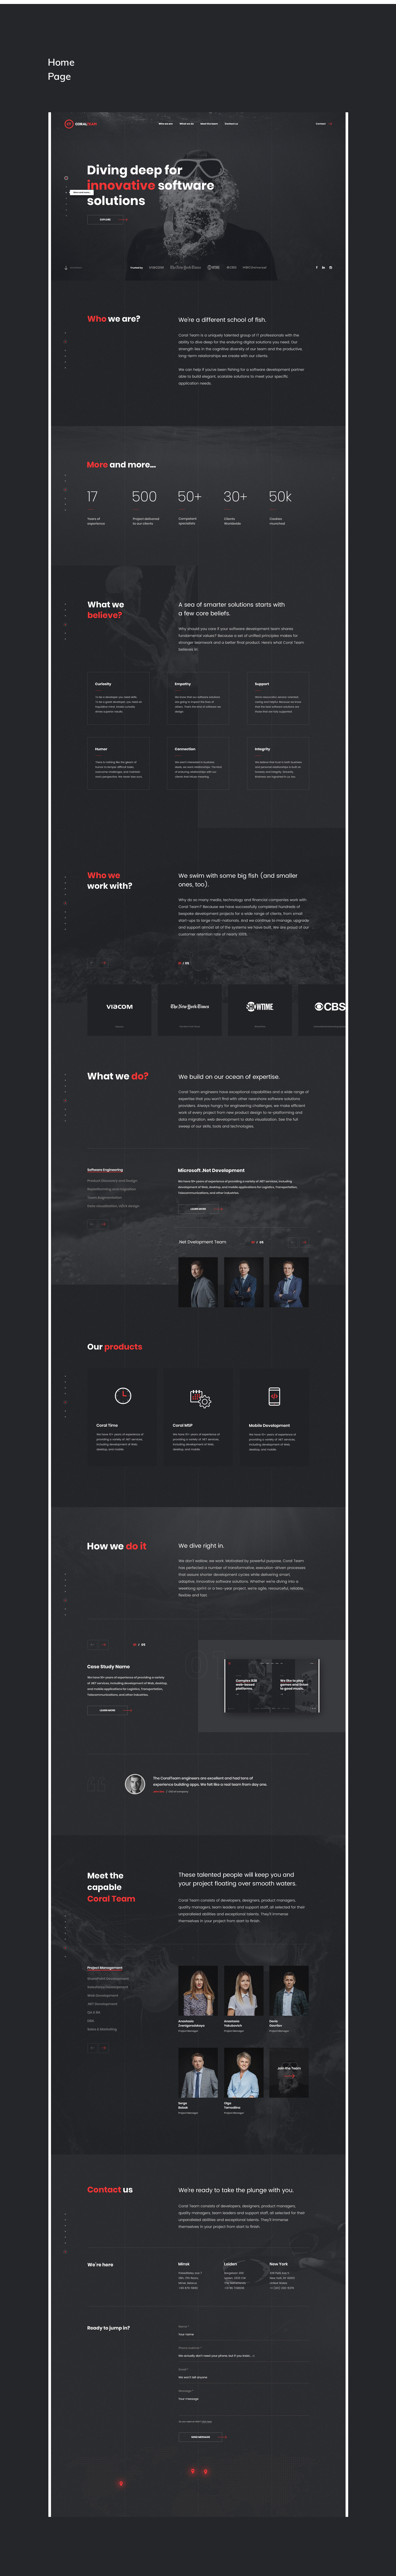 Website agency softwarehouse team portfolio sea Ocean black dark branding 